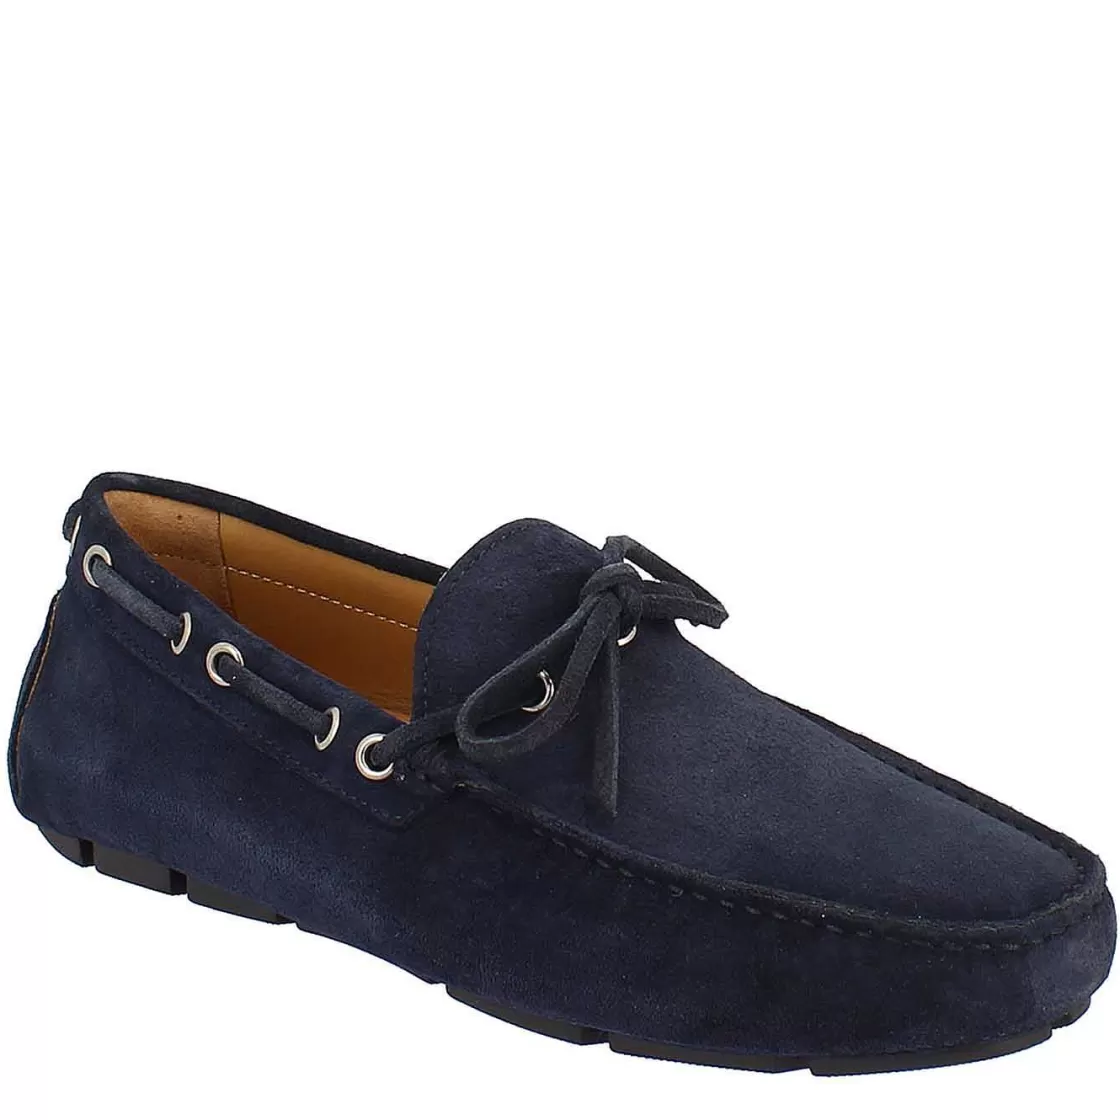 Leonardo Handmade Men'S Carshoe Loafers In Navy Blue Suede Leather. Cheap